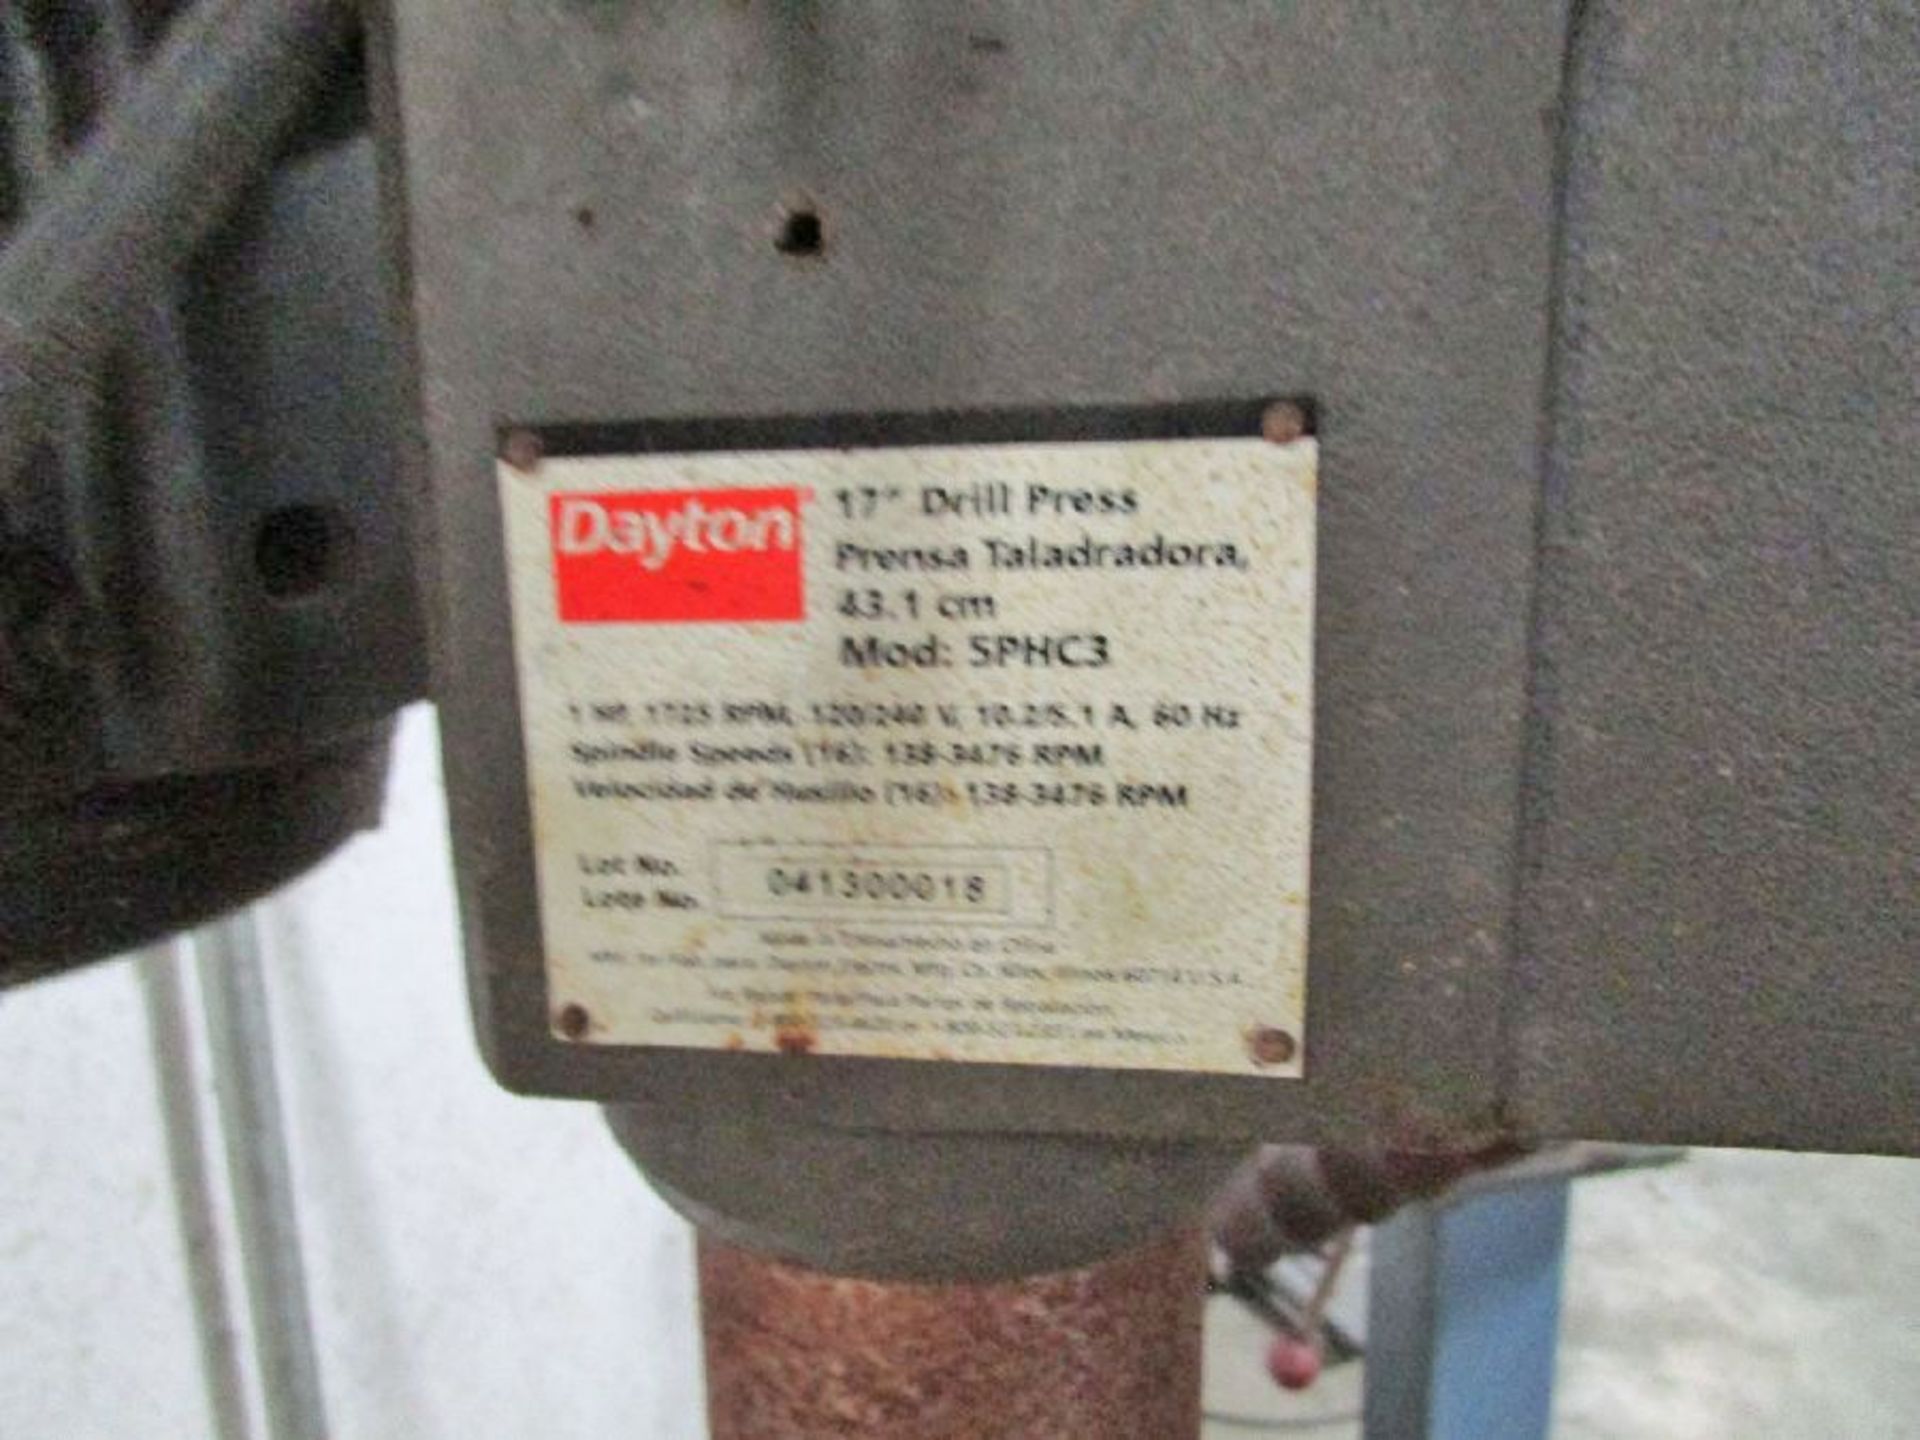 Dayton Model 5PHC3 17"" Drill Press - Image 3 of 5